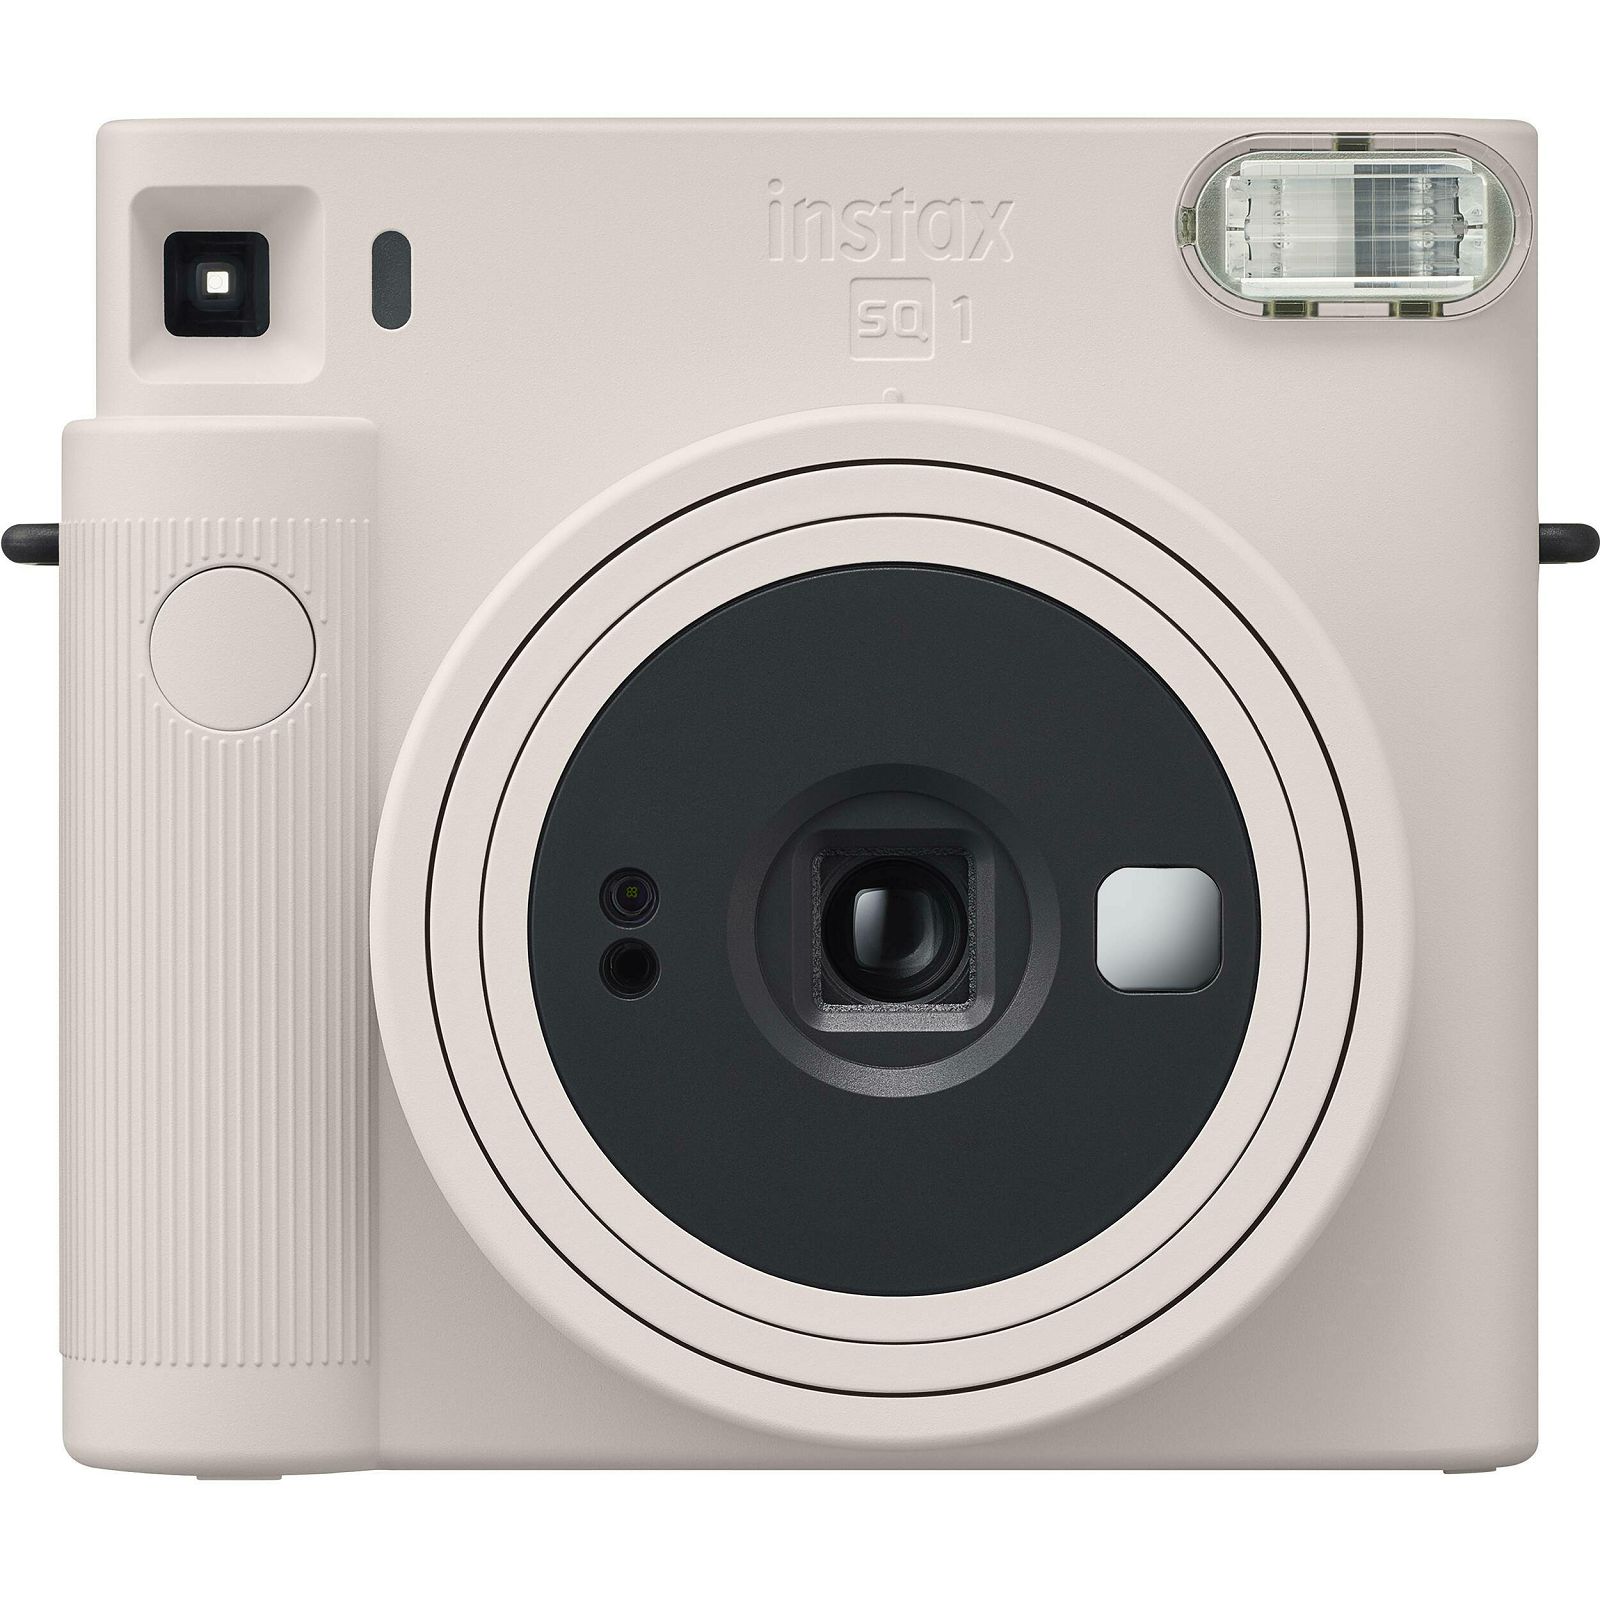 Fujifilm Instax Square SQ1 Chalk White bijeli Fuji fotoaparat s trenutnim ispisom fotografije 